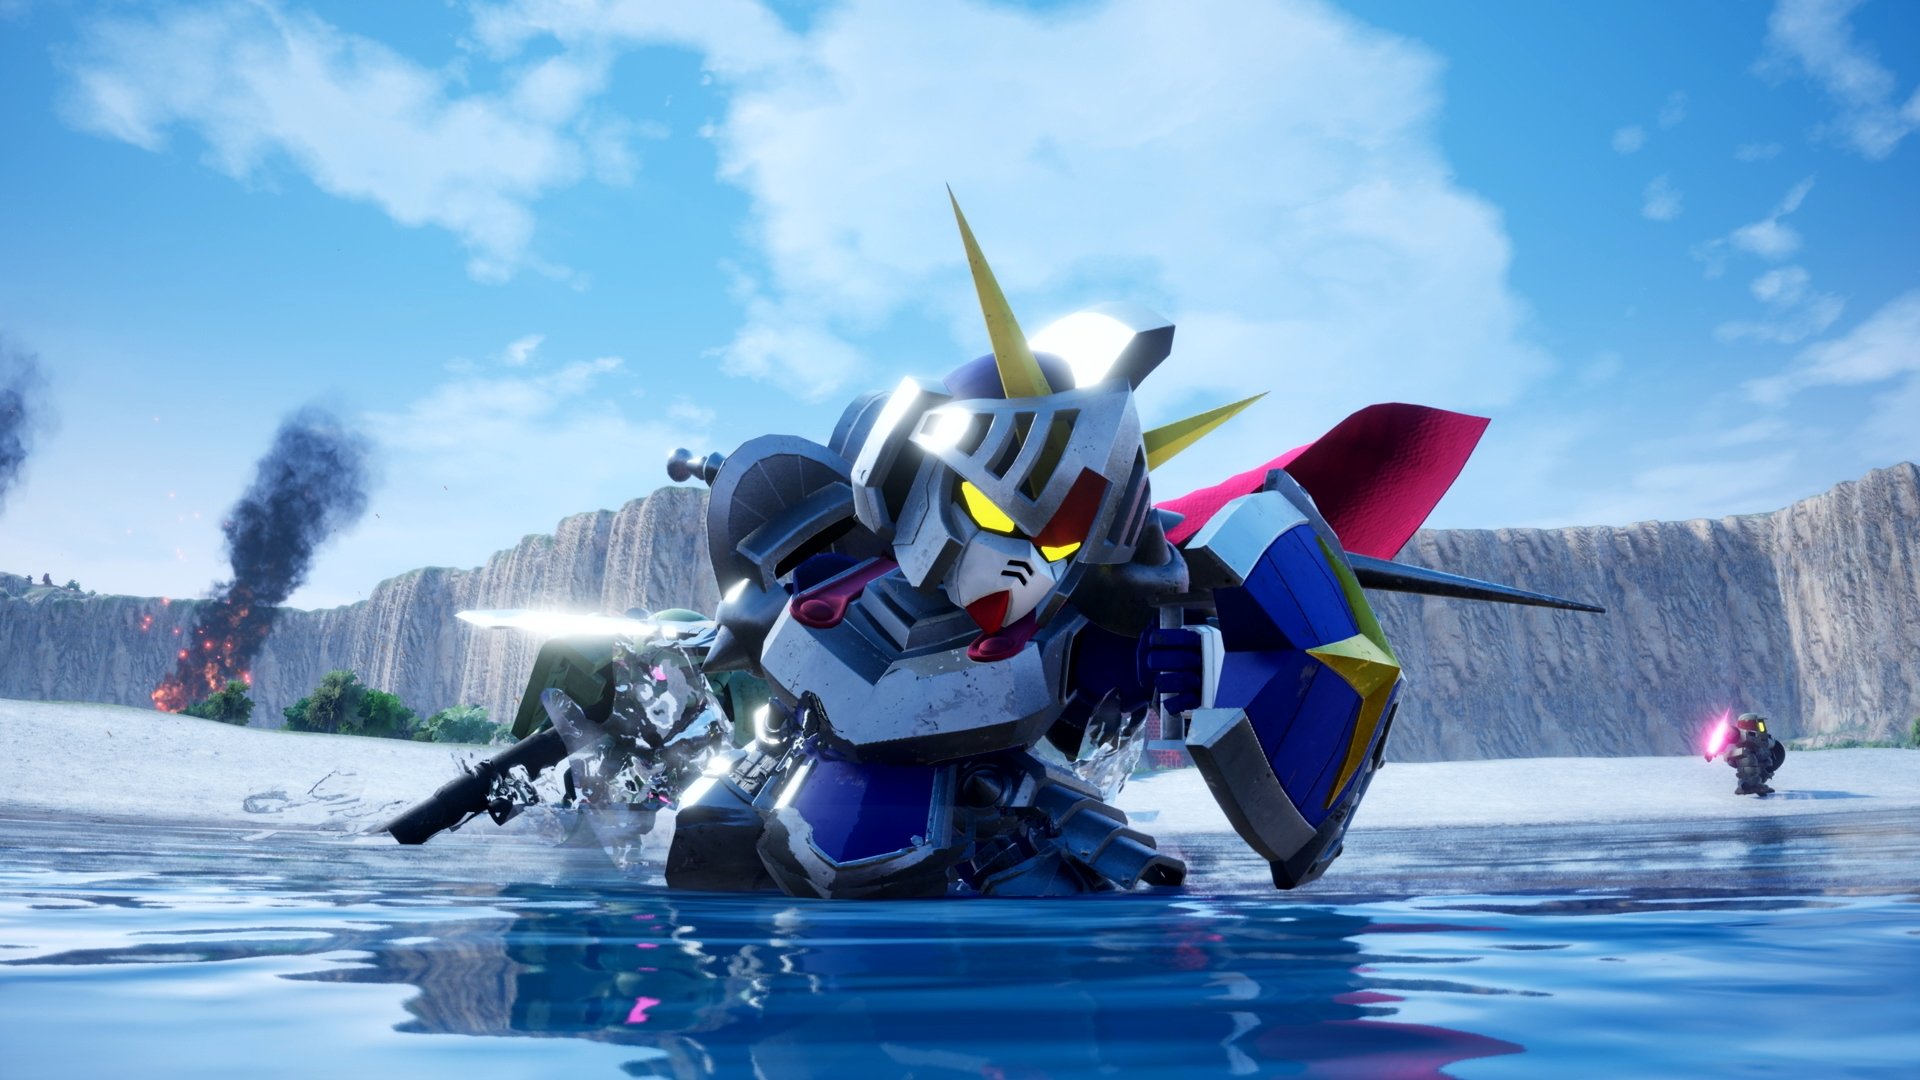 SD Gundam Battle Alliance launches on August 25th